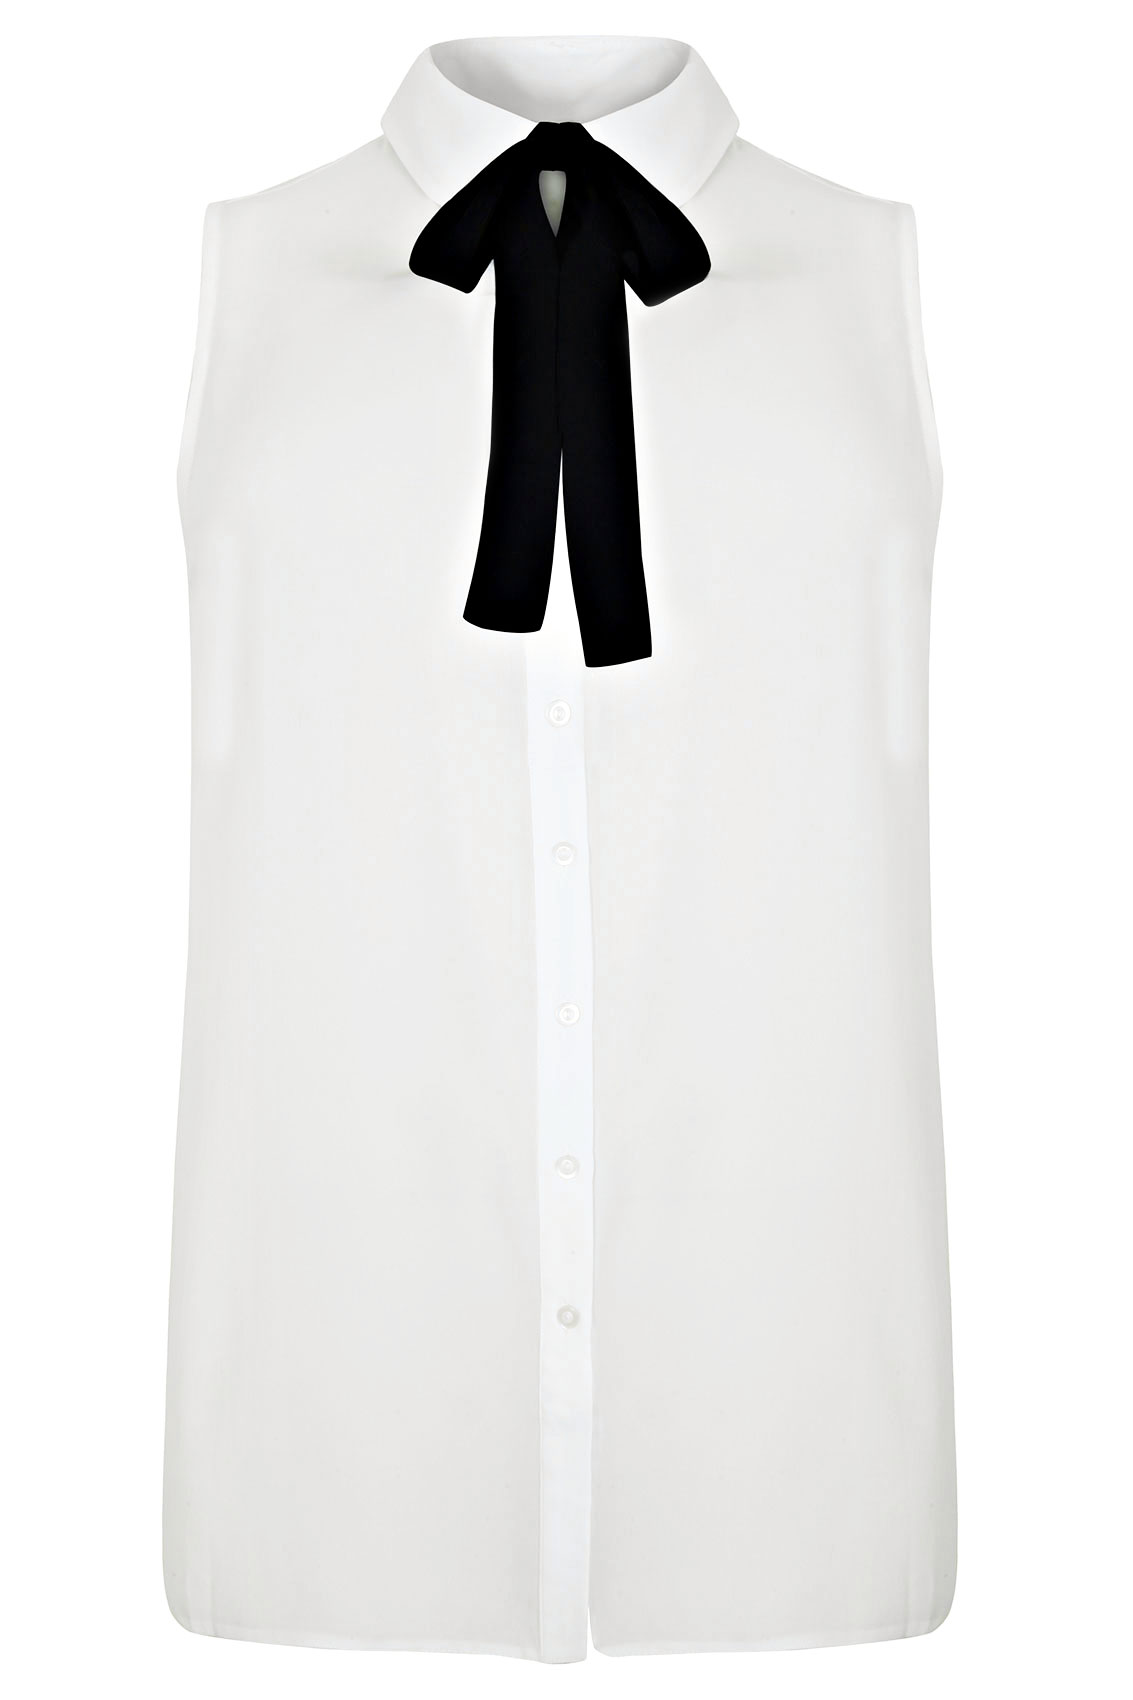 Ivory Chiffon Sleeveless Shirt With Black Neck Tie Plus Size 16 to 32